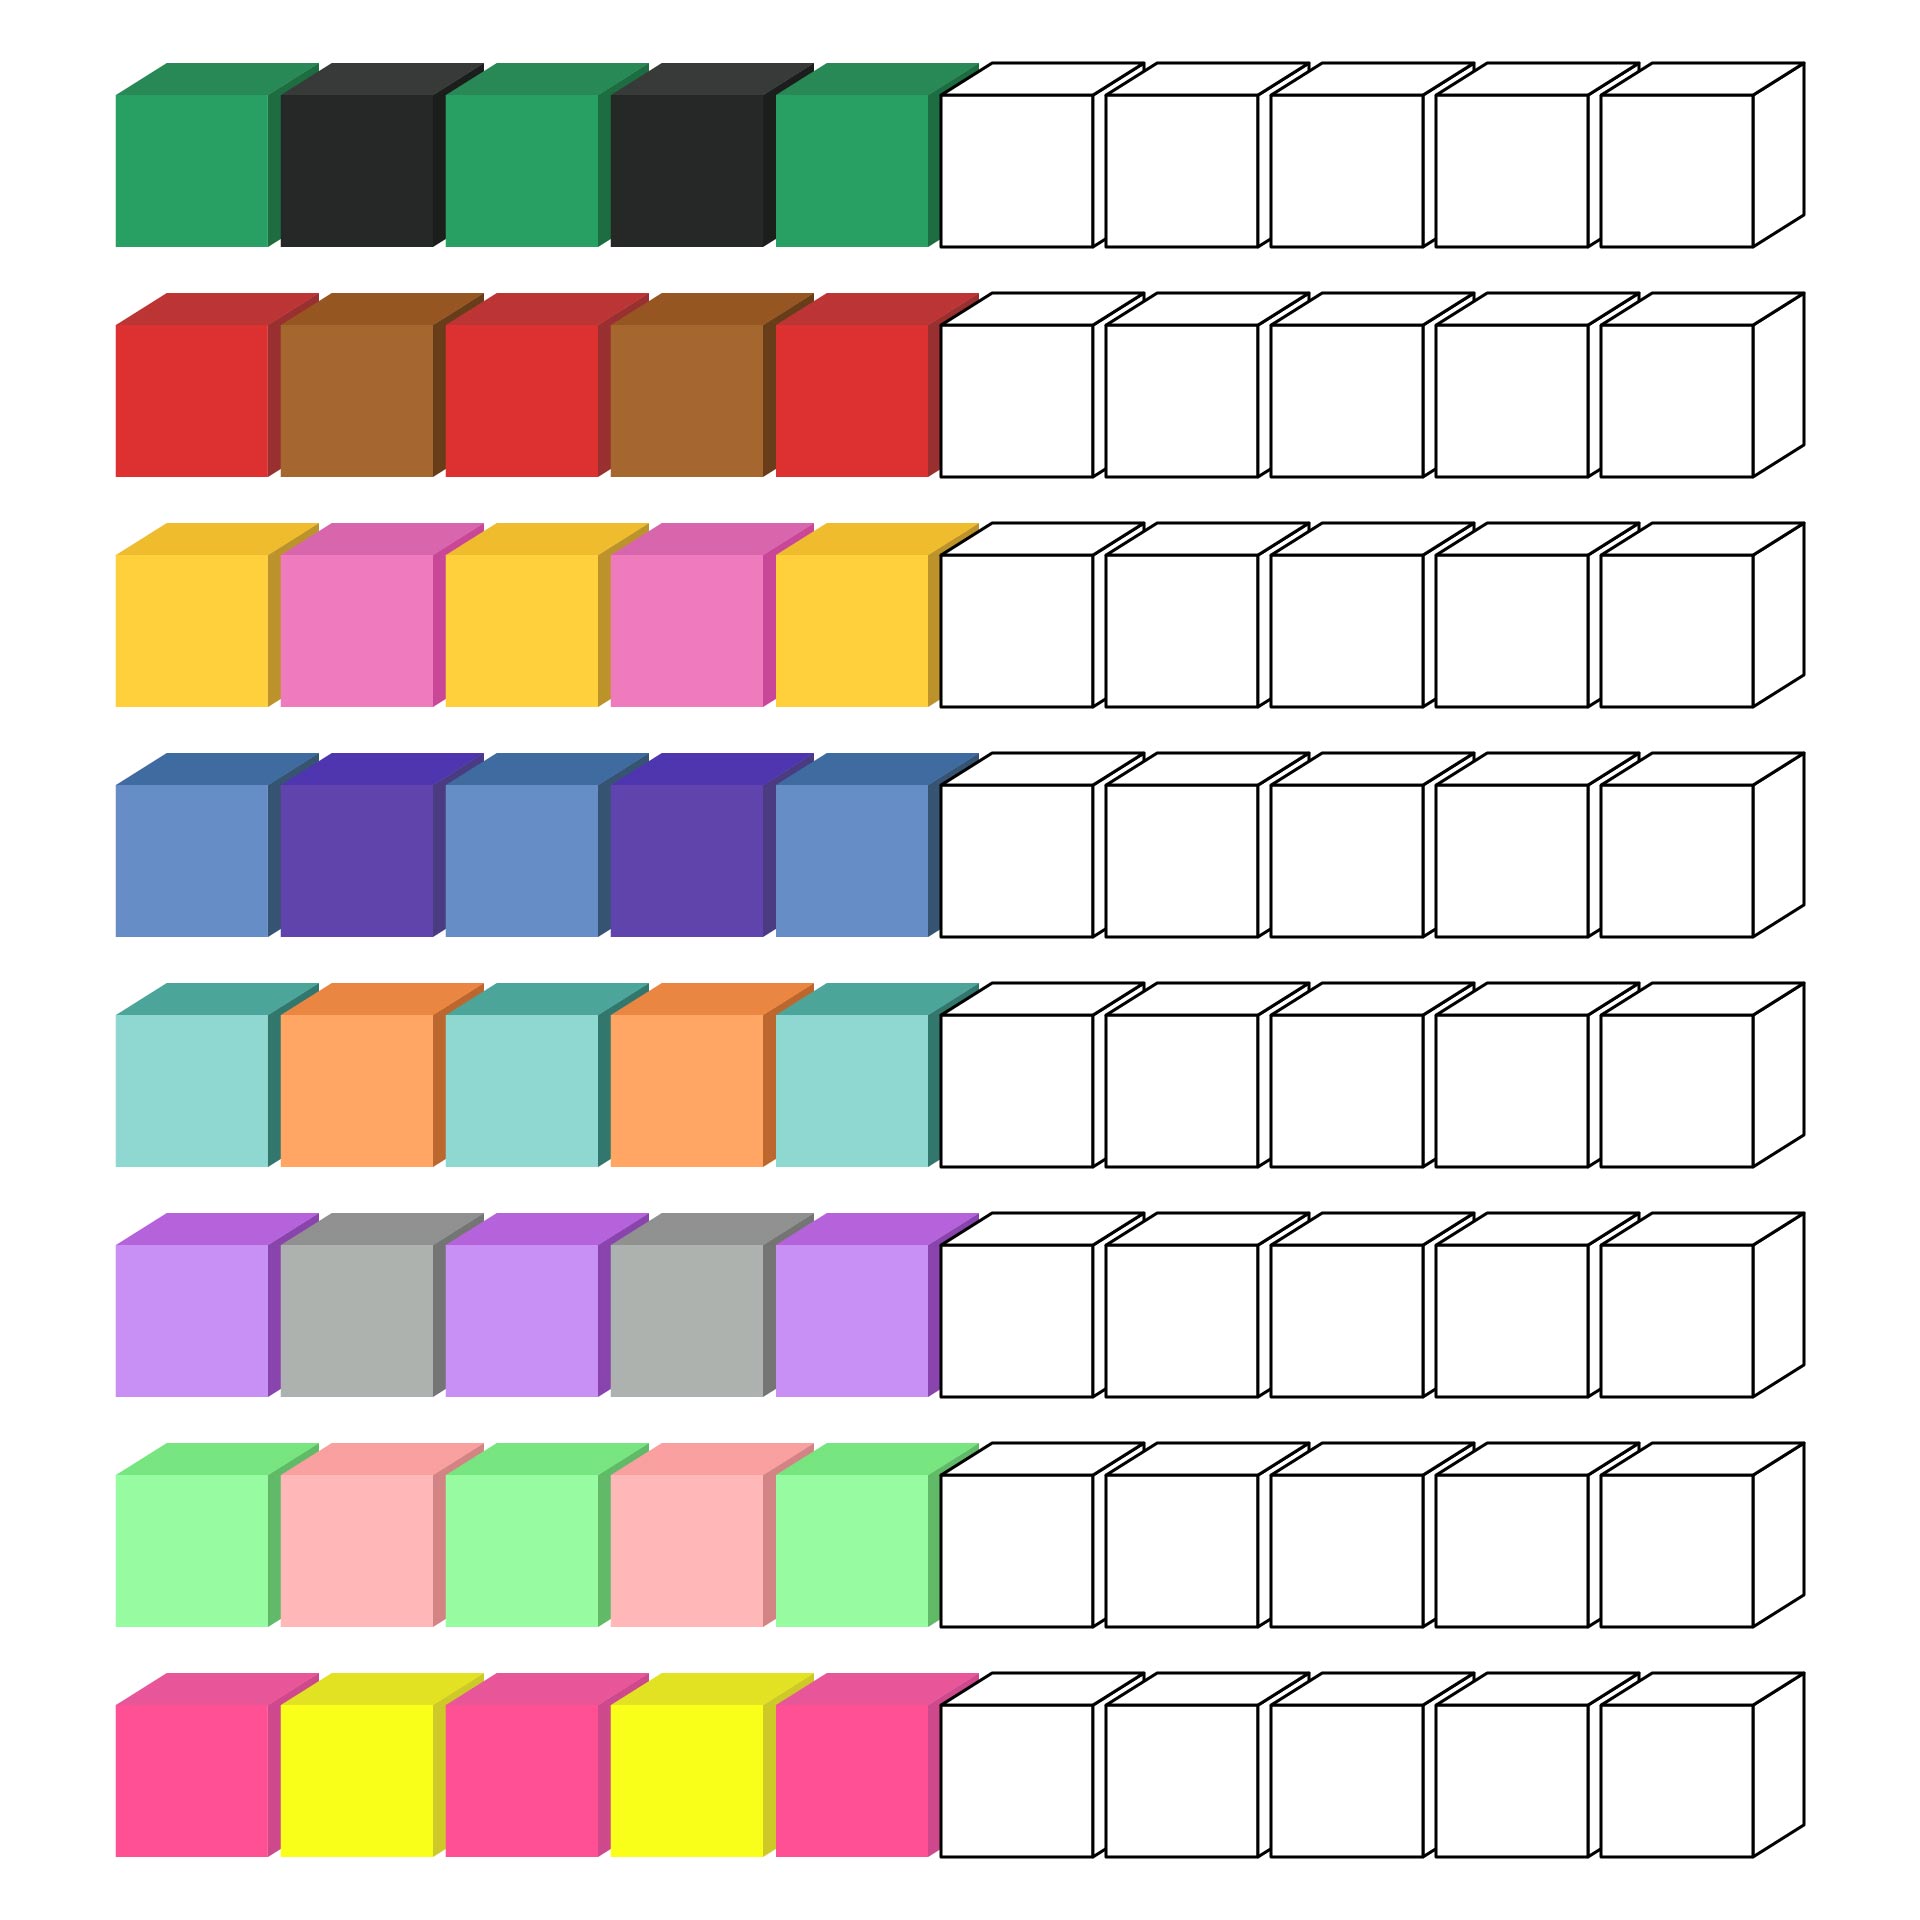 5 Best Images of Unifix Cube Template Printable Unifix Cube Pattern